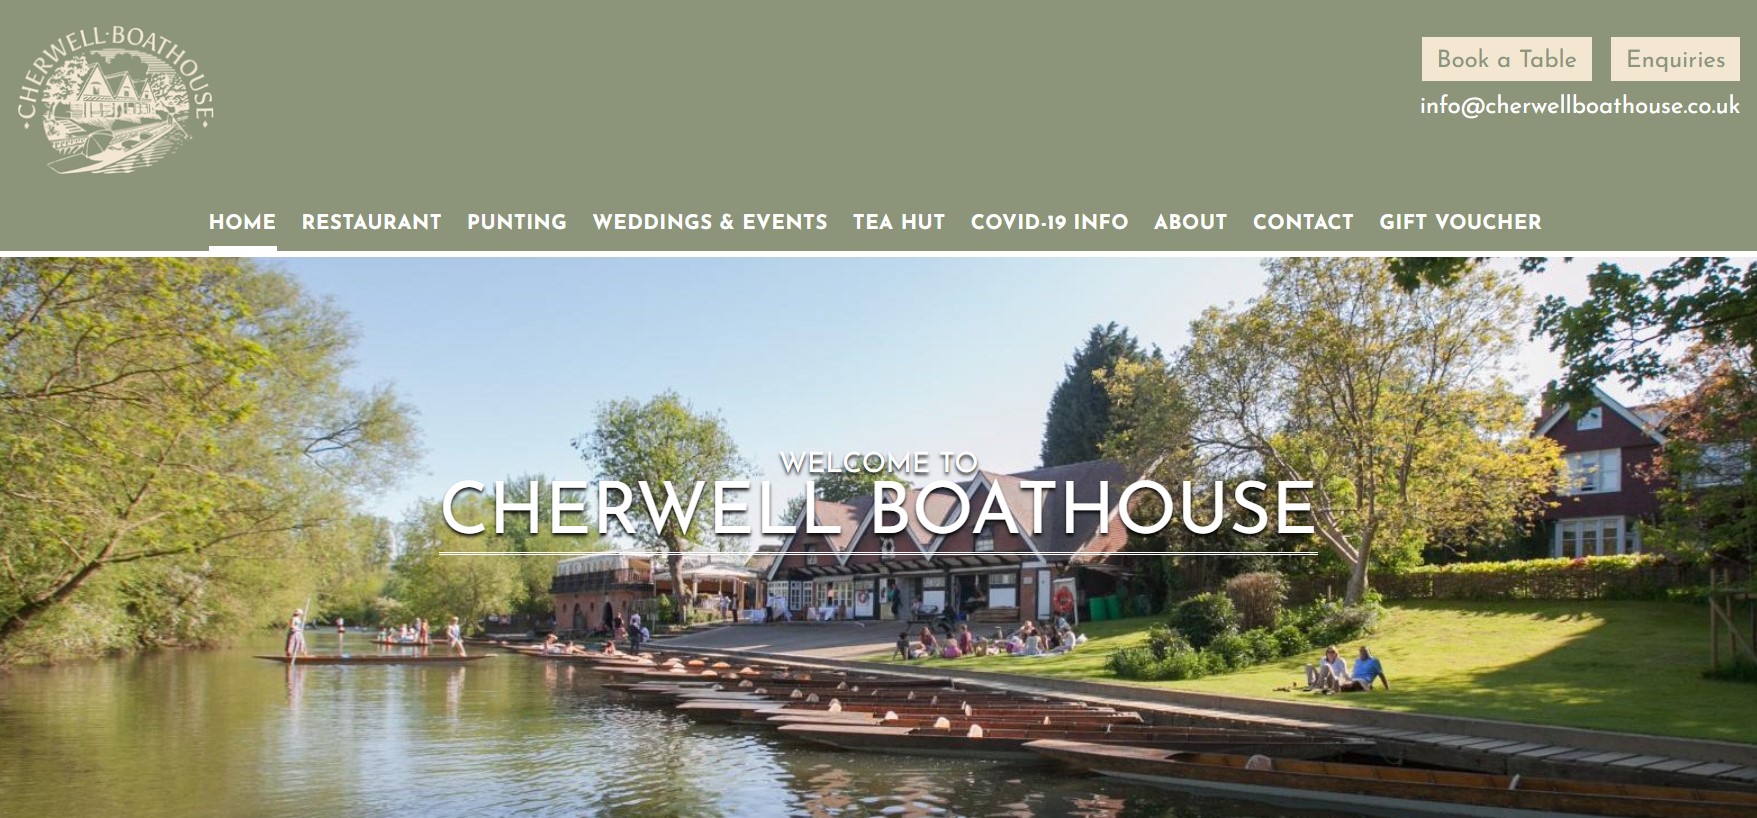 Cherwell Boathouse